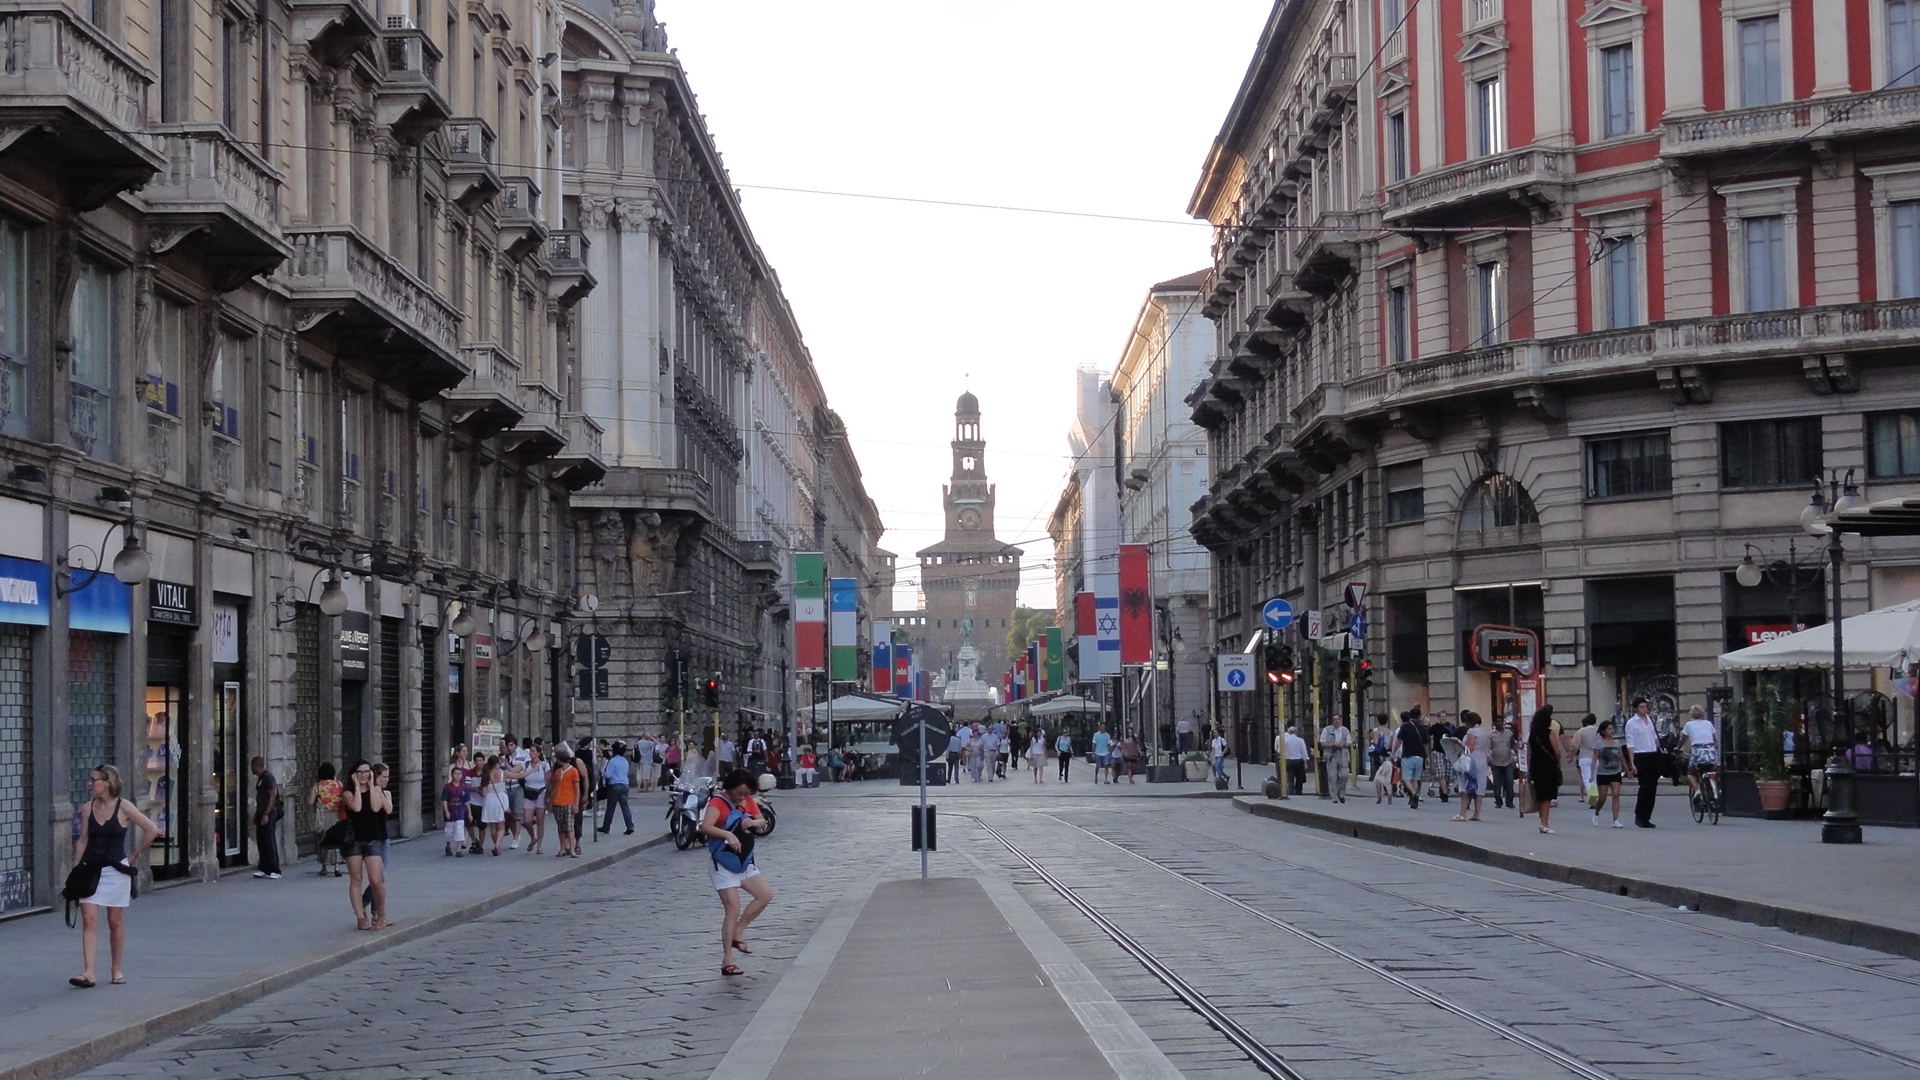 Picture of busy street with Castello Sforzesco